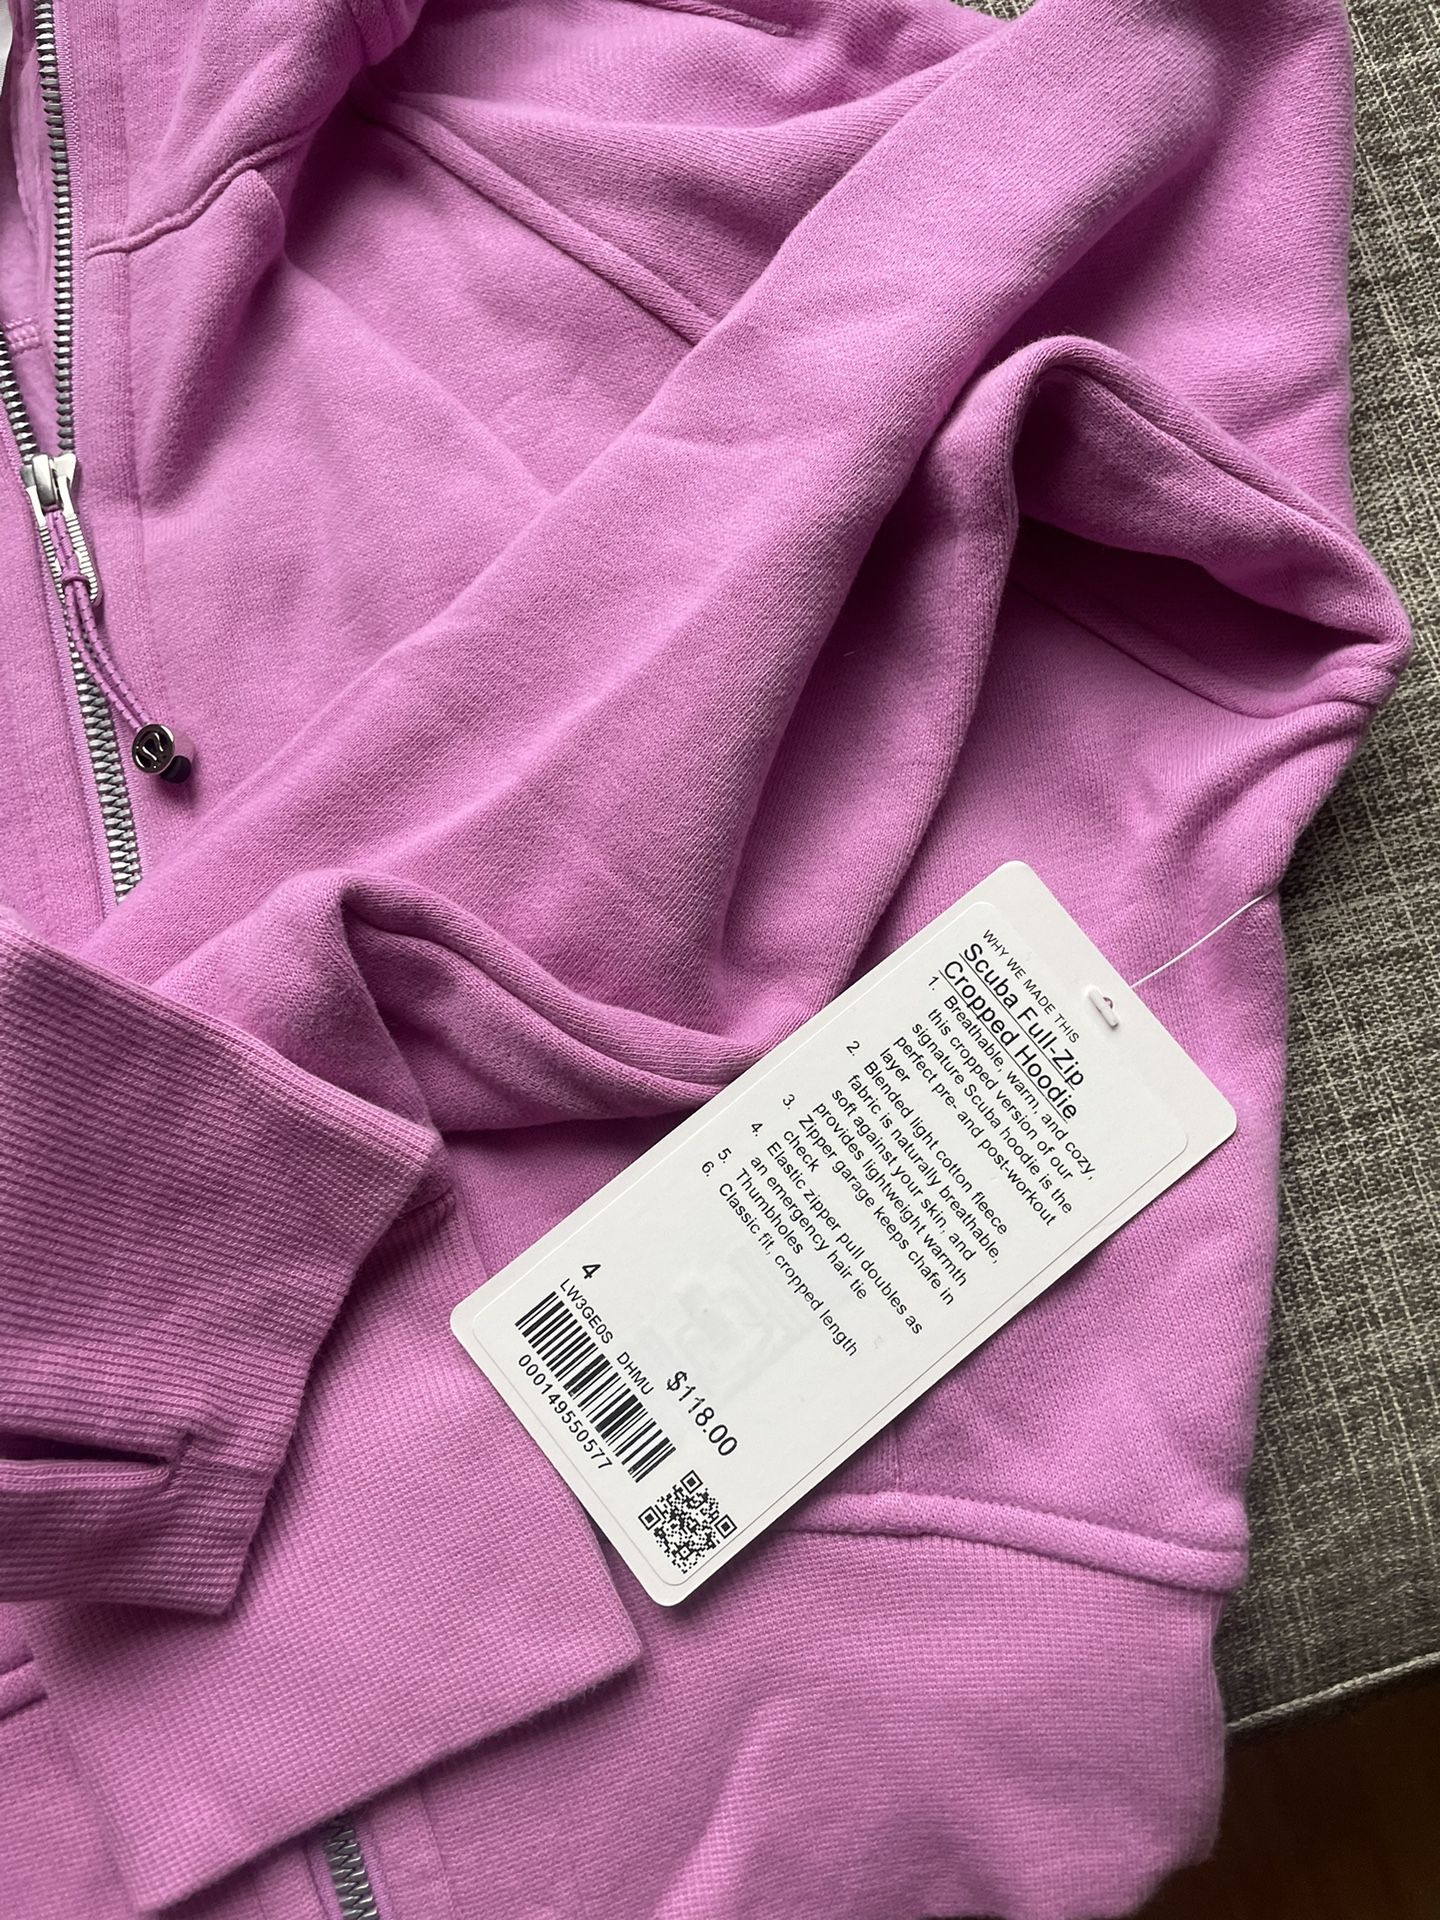 Brand New Pink Lullulemon Jacket